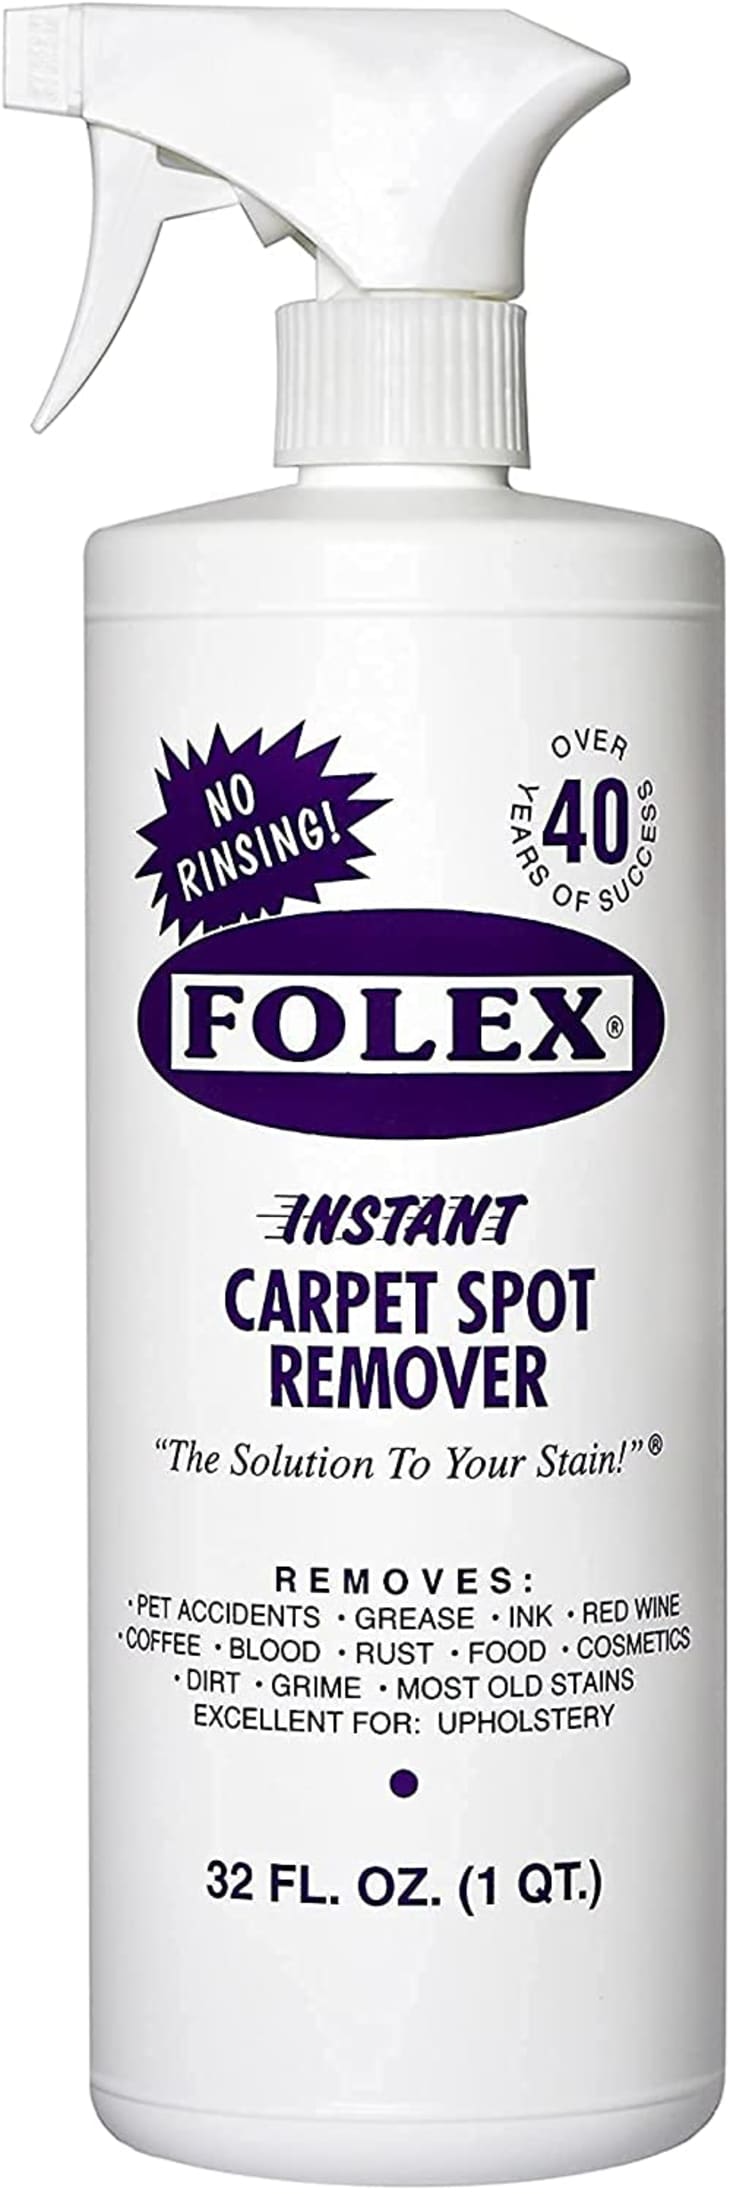 FOLEX Instant Carpet Spot Remover, 32oz at Amazon